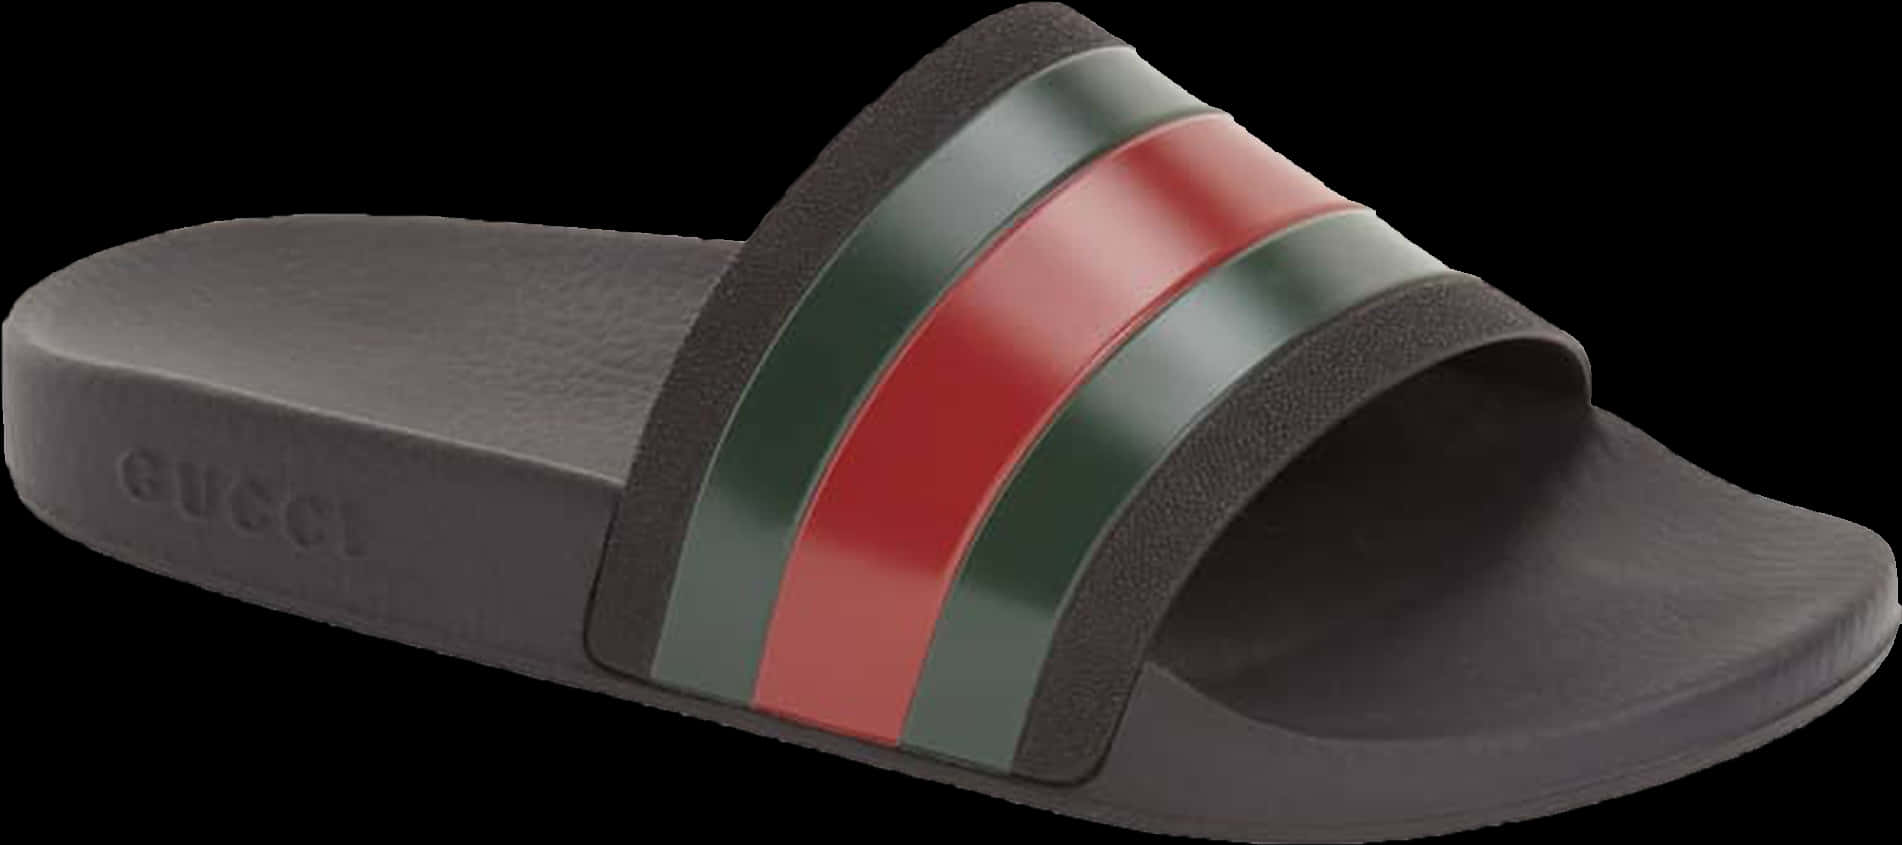 Gucci Striped Rubber Slide Sandal